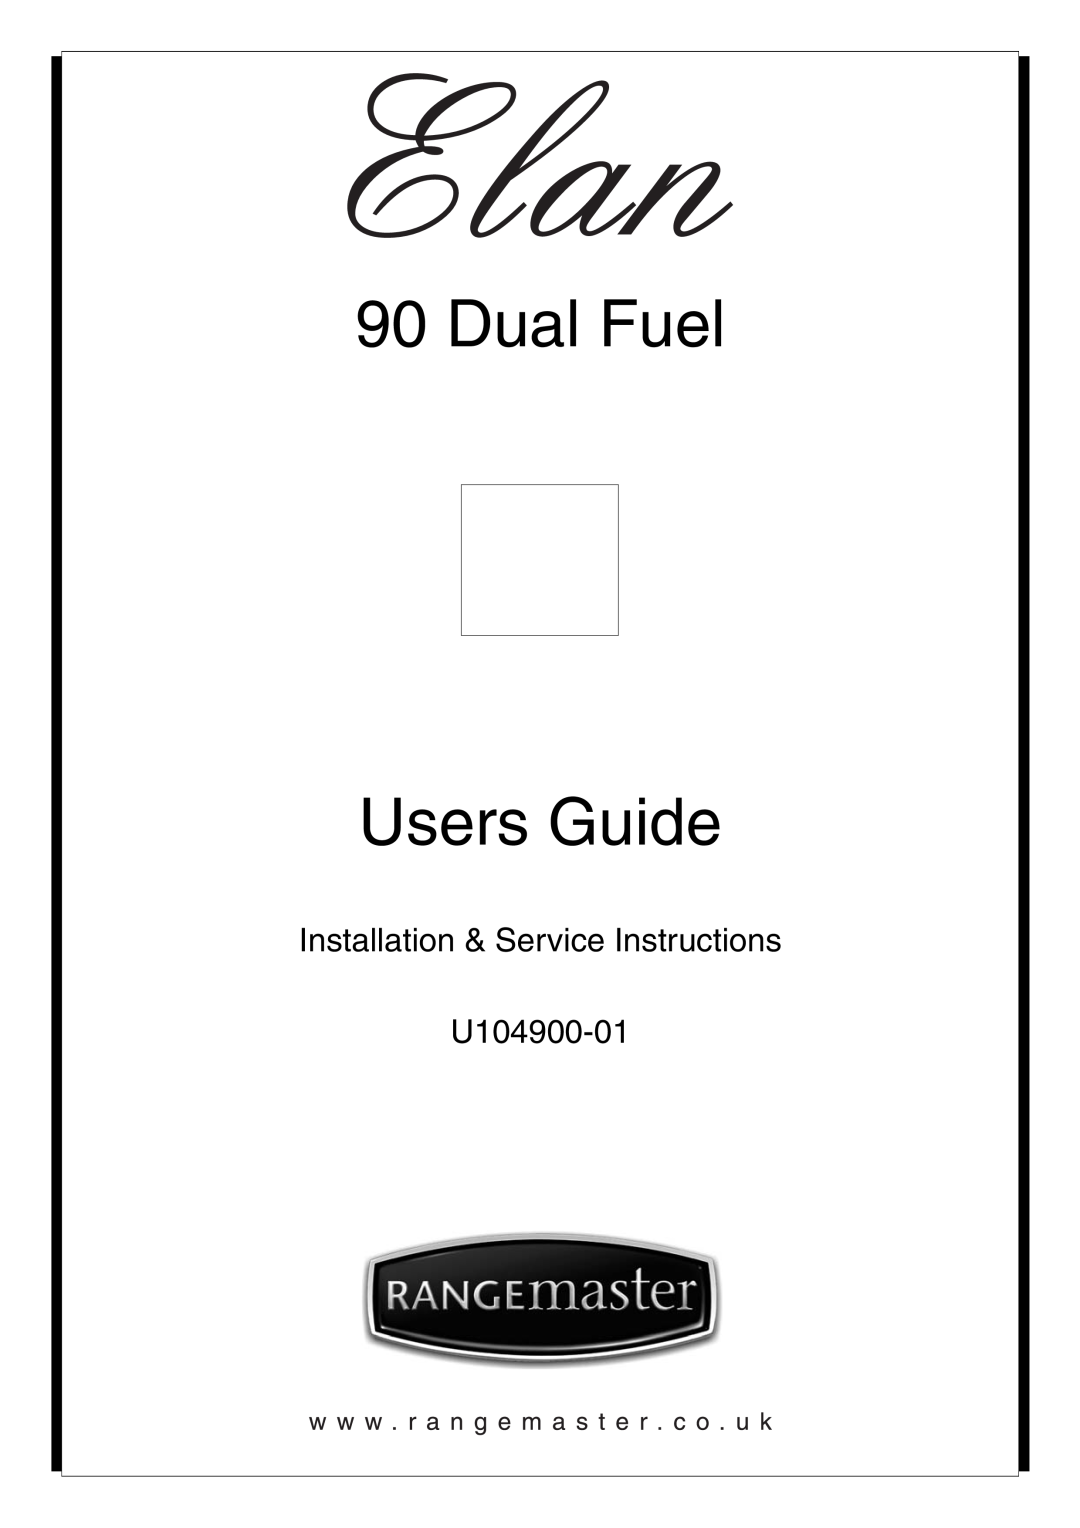 Rangemaster manual Dual Fuel Users Guide, Installation & Service Instructions U104900-01 